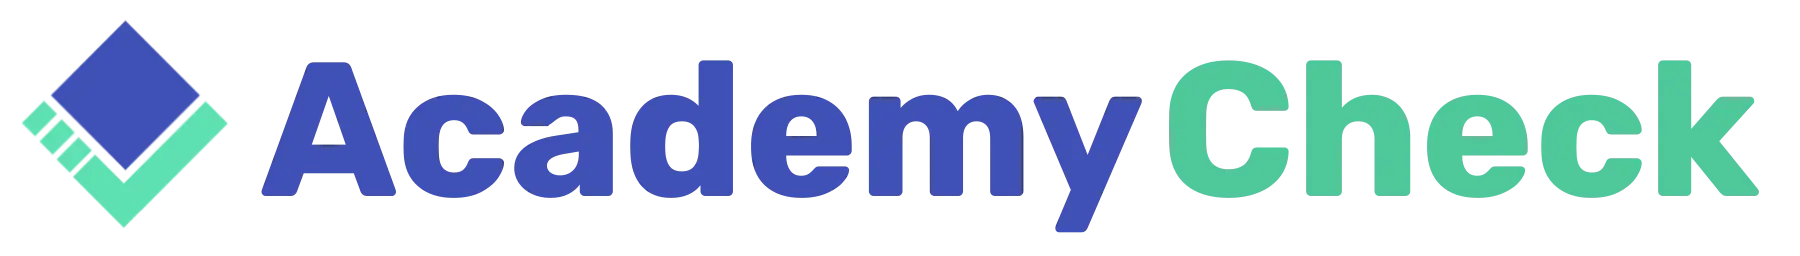 AcademyCheck Full Logo